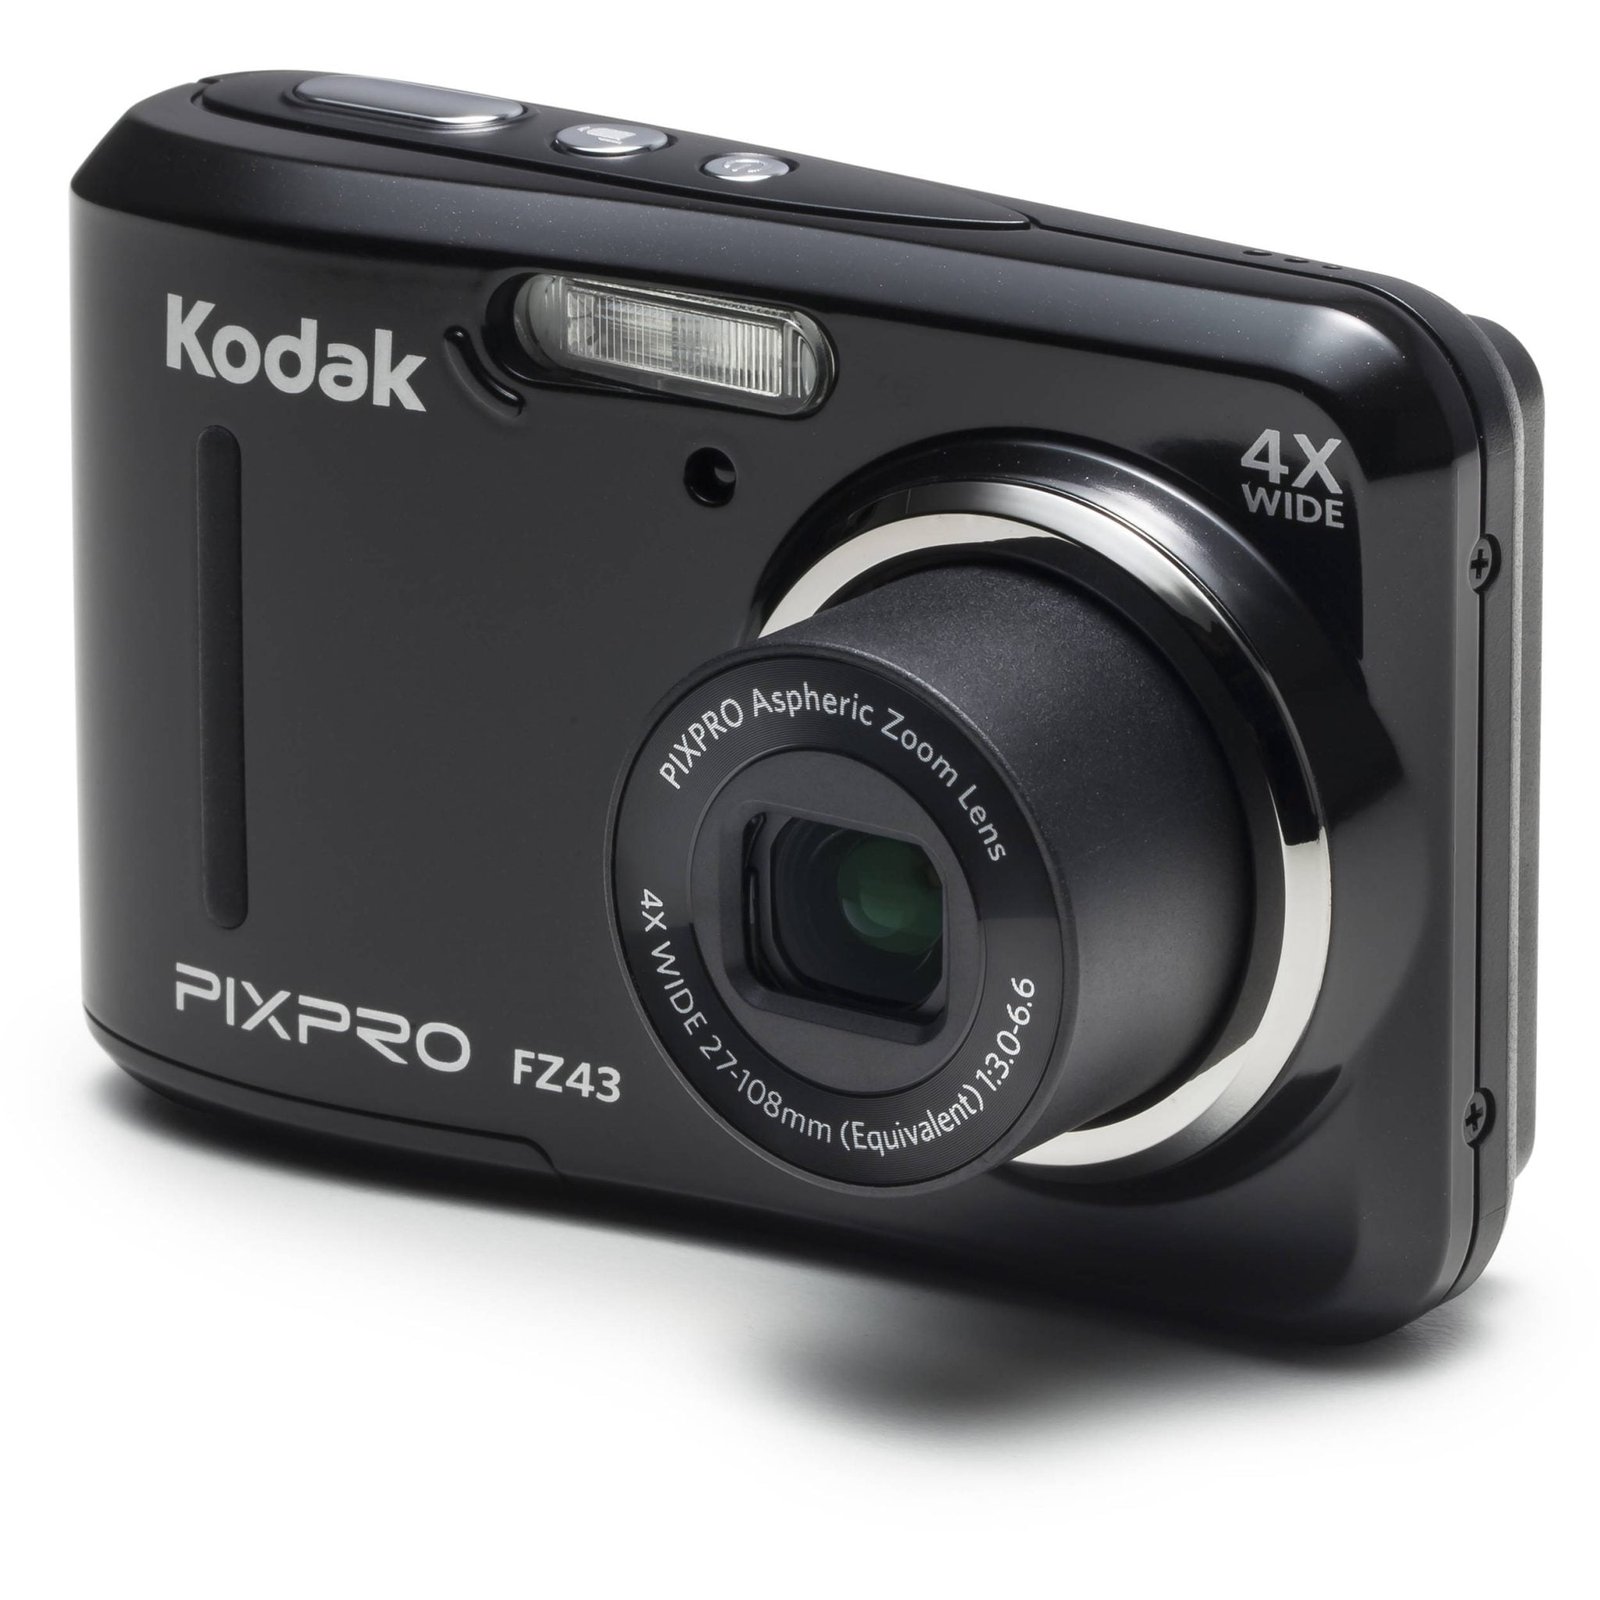 Kodak PIXPRO Friendly Zoom FZ43